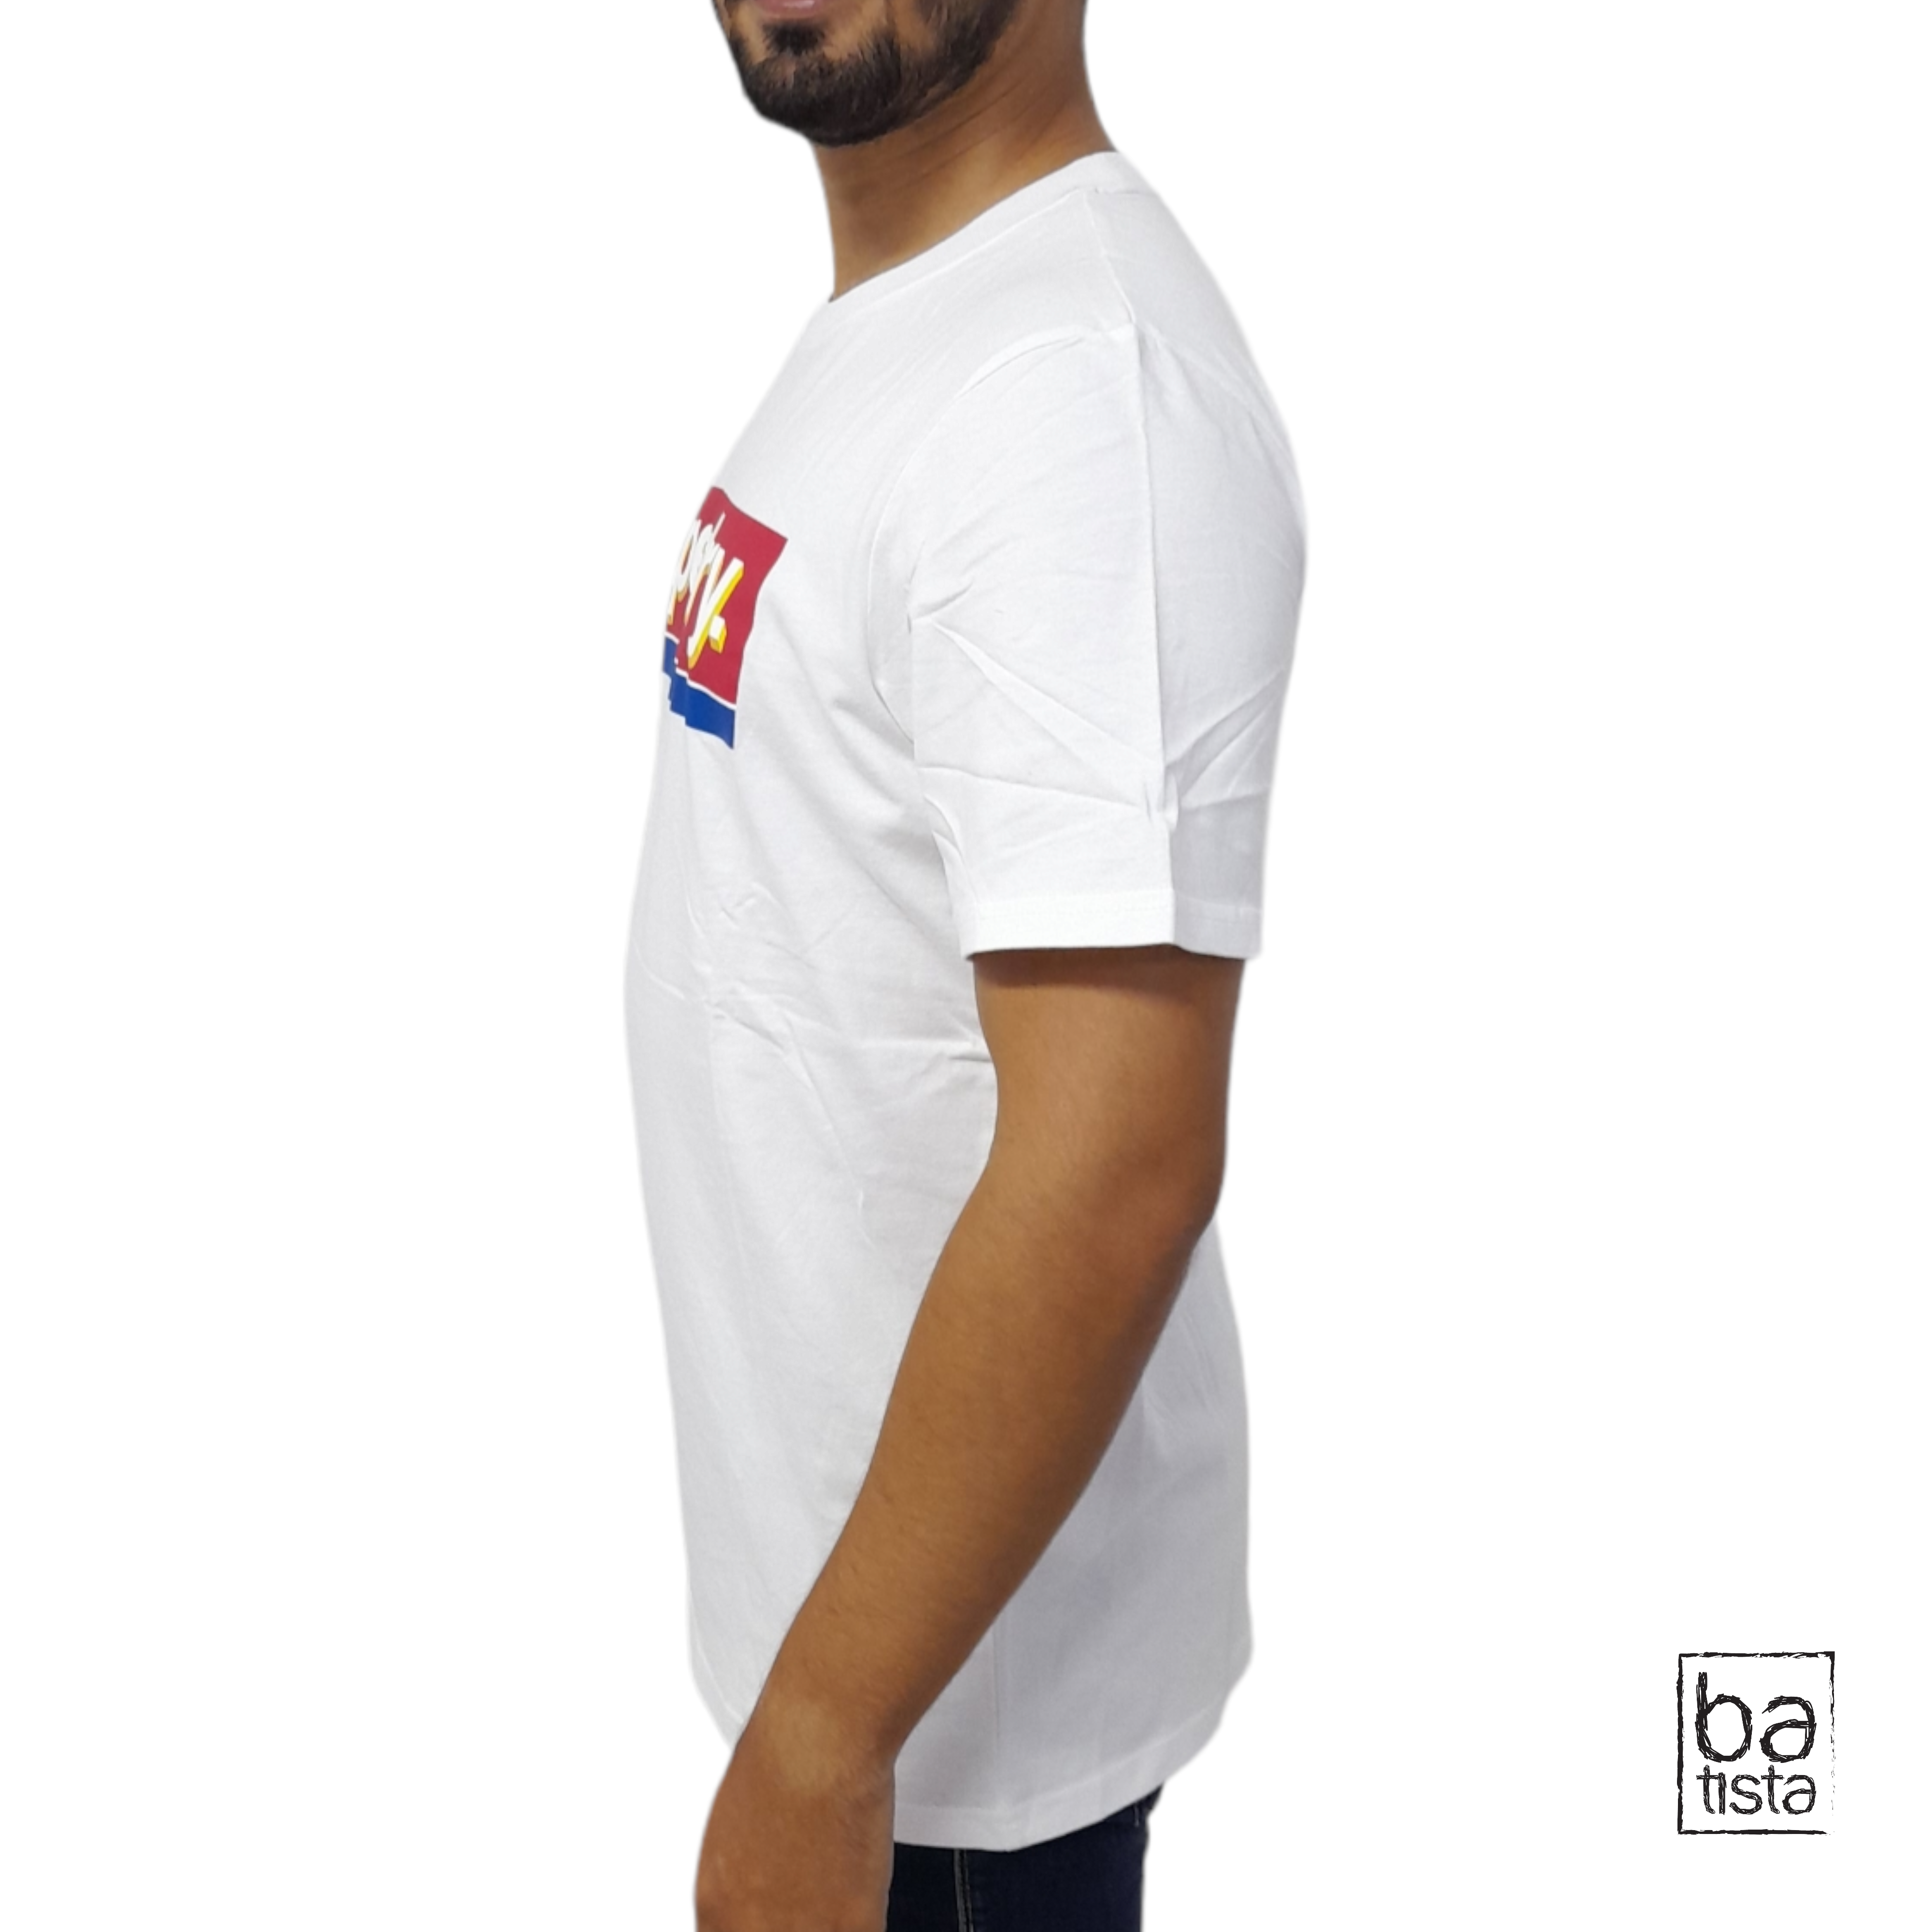 Camiseta Superdry M1011387A Blanco